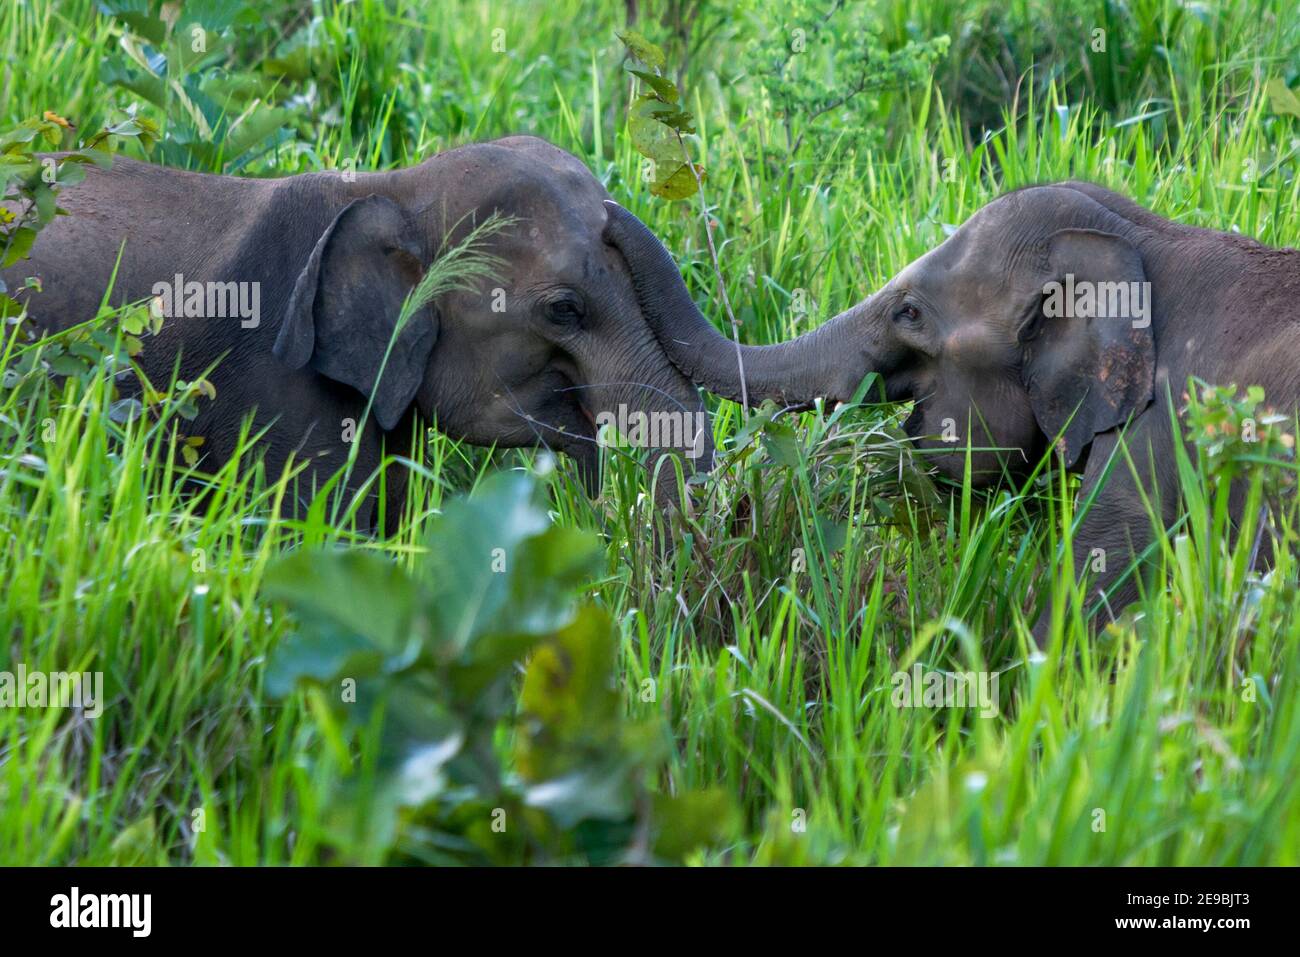 Wild elephants playing amongst lush vegetation beside the road near Habarana in central Sri Lanka. Stock Photo